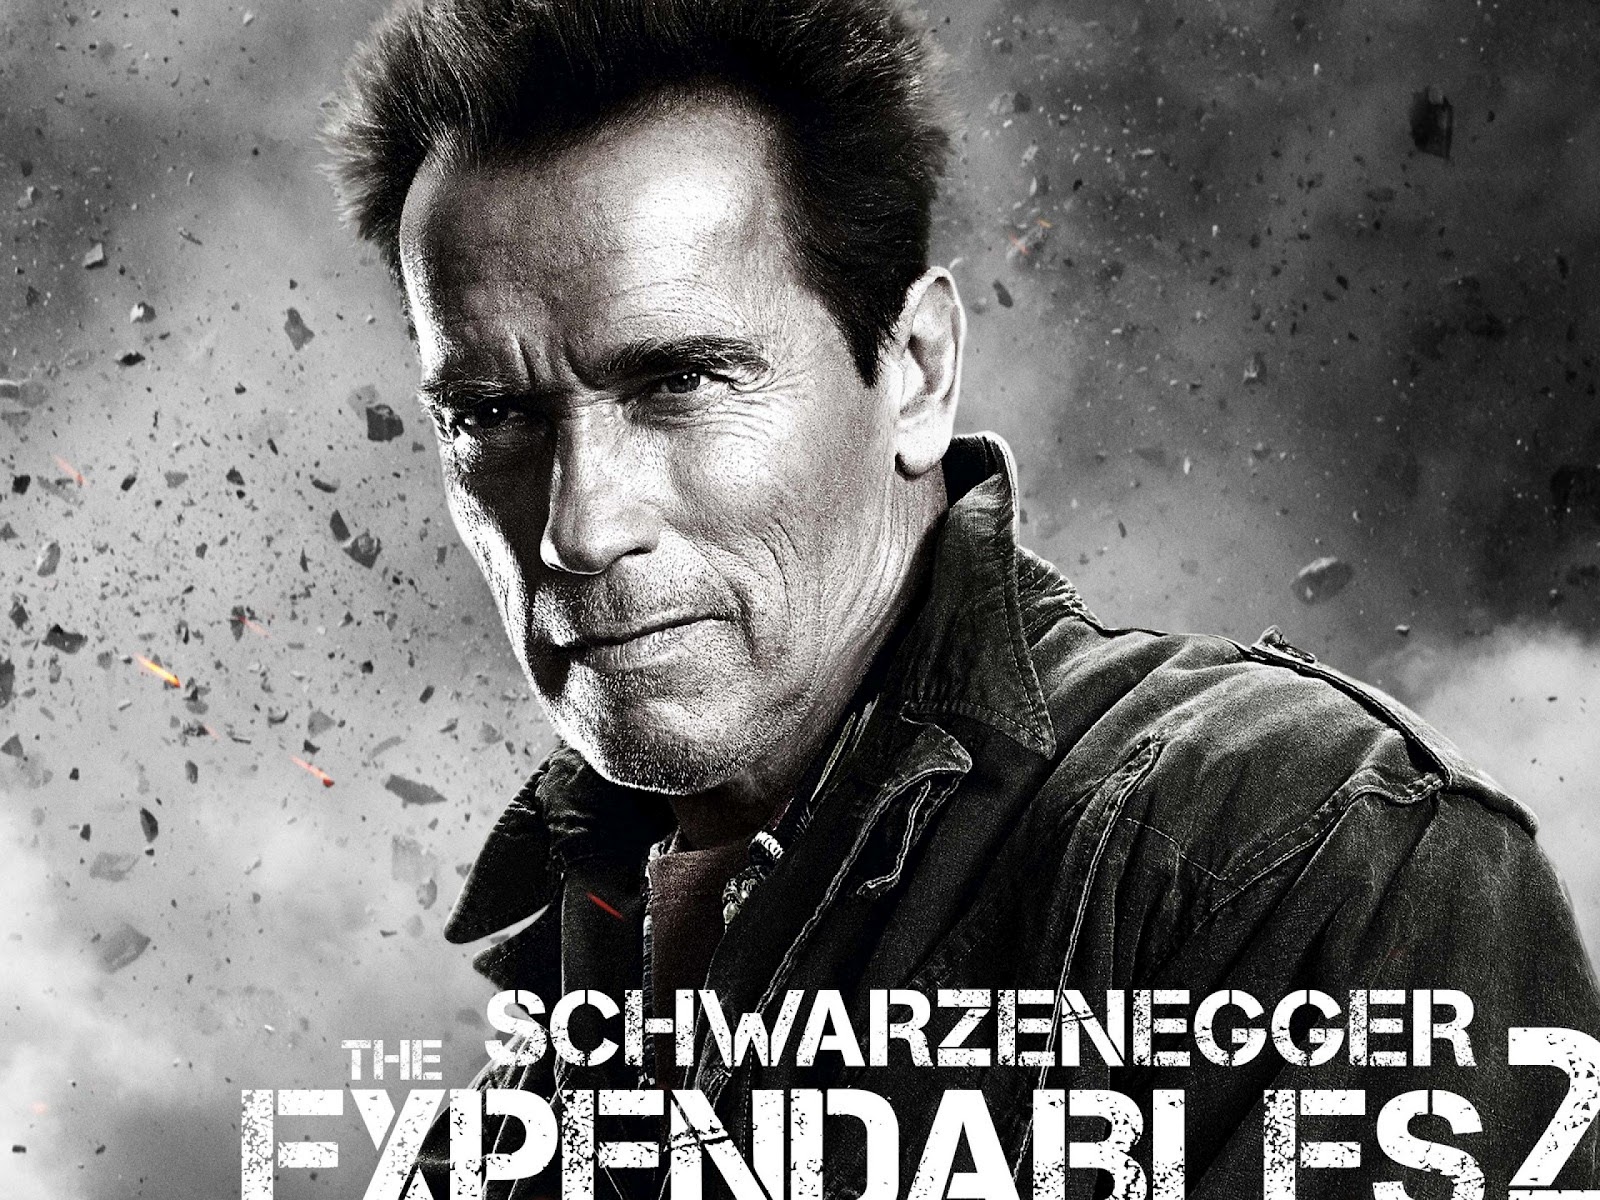 http://1.bp.blogspot.com/-kNFhro0EG5I/T_WuYseODUI/AAAAAAAAB-I/kU7DvqPU4to/s1600/The-Expendables-2-Movie-Arnold-Schwarzenegger-1920x2560.jpg